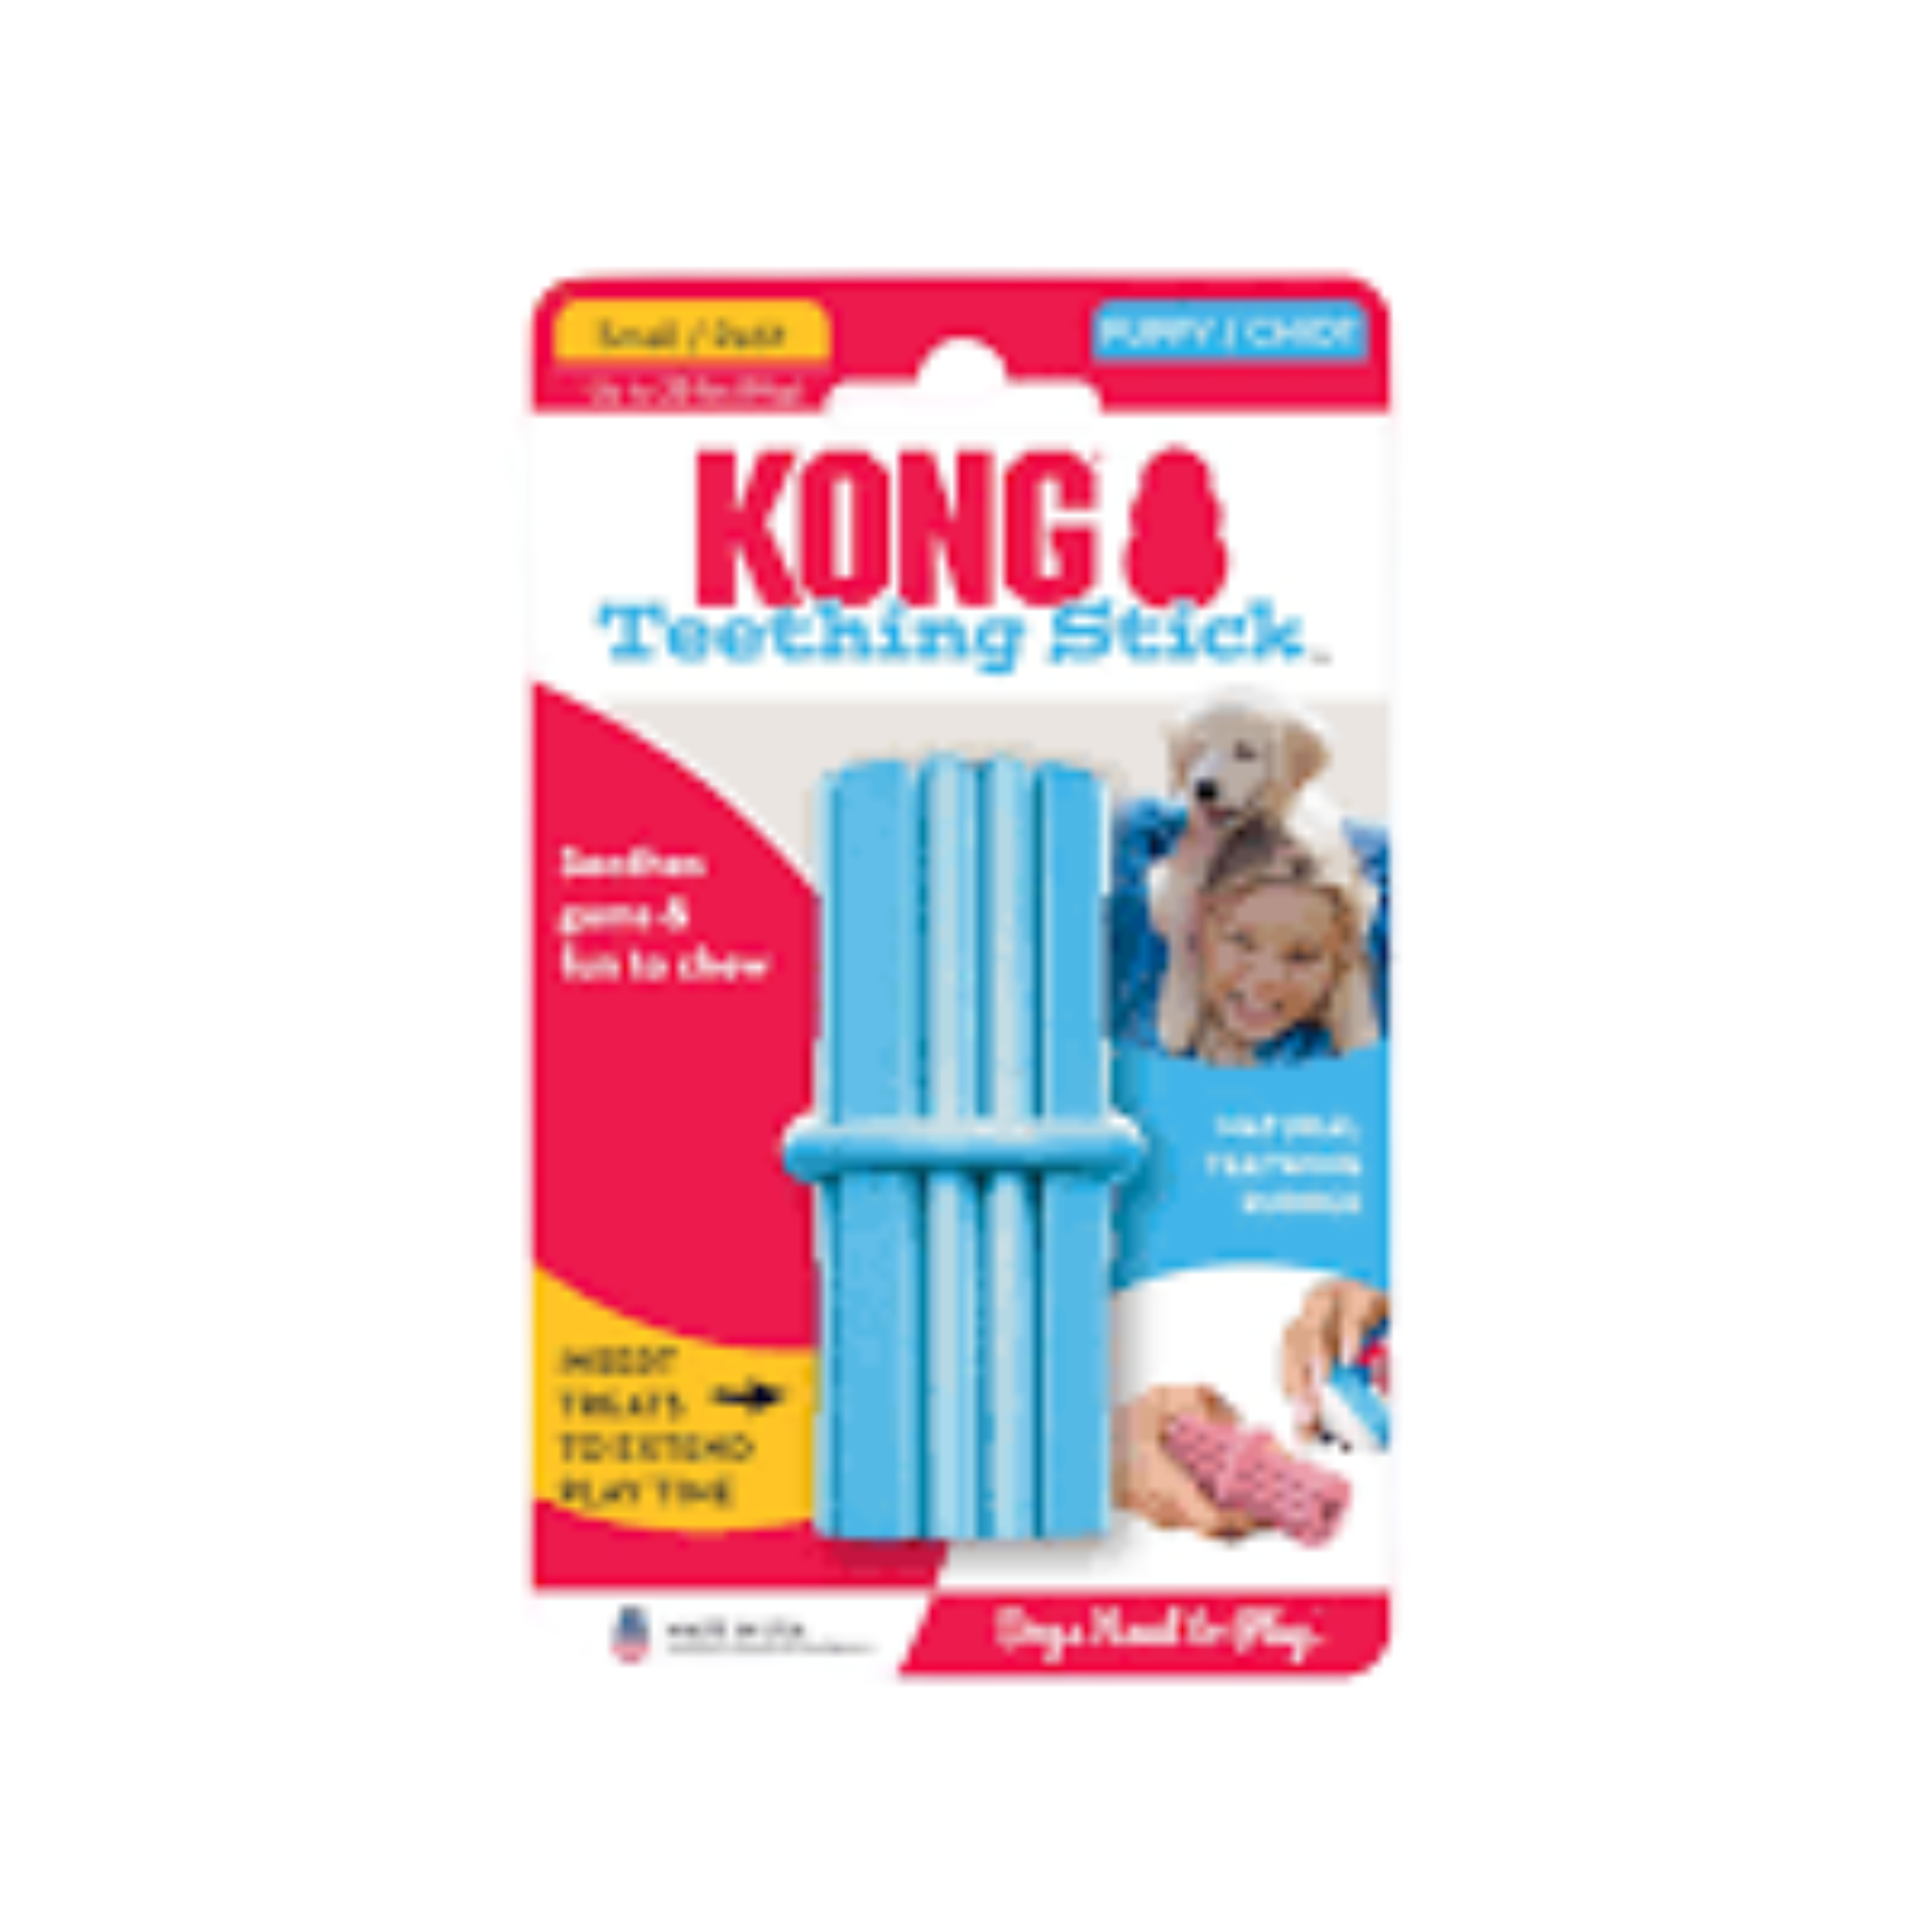 Kong puppy Teething Stick